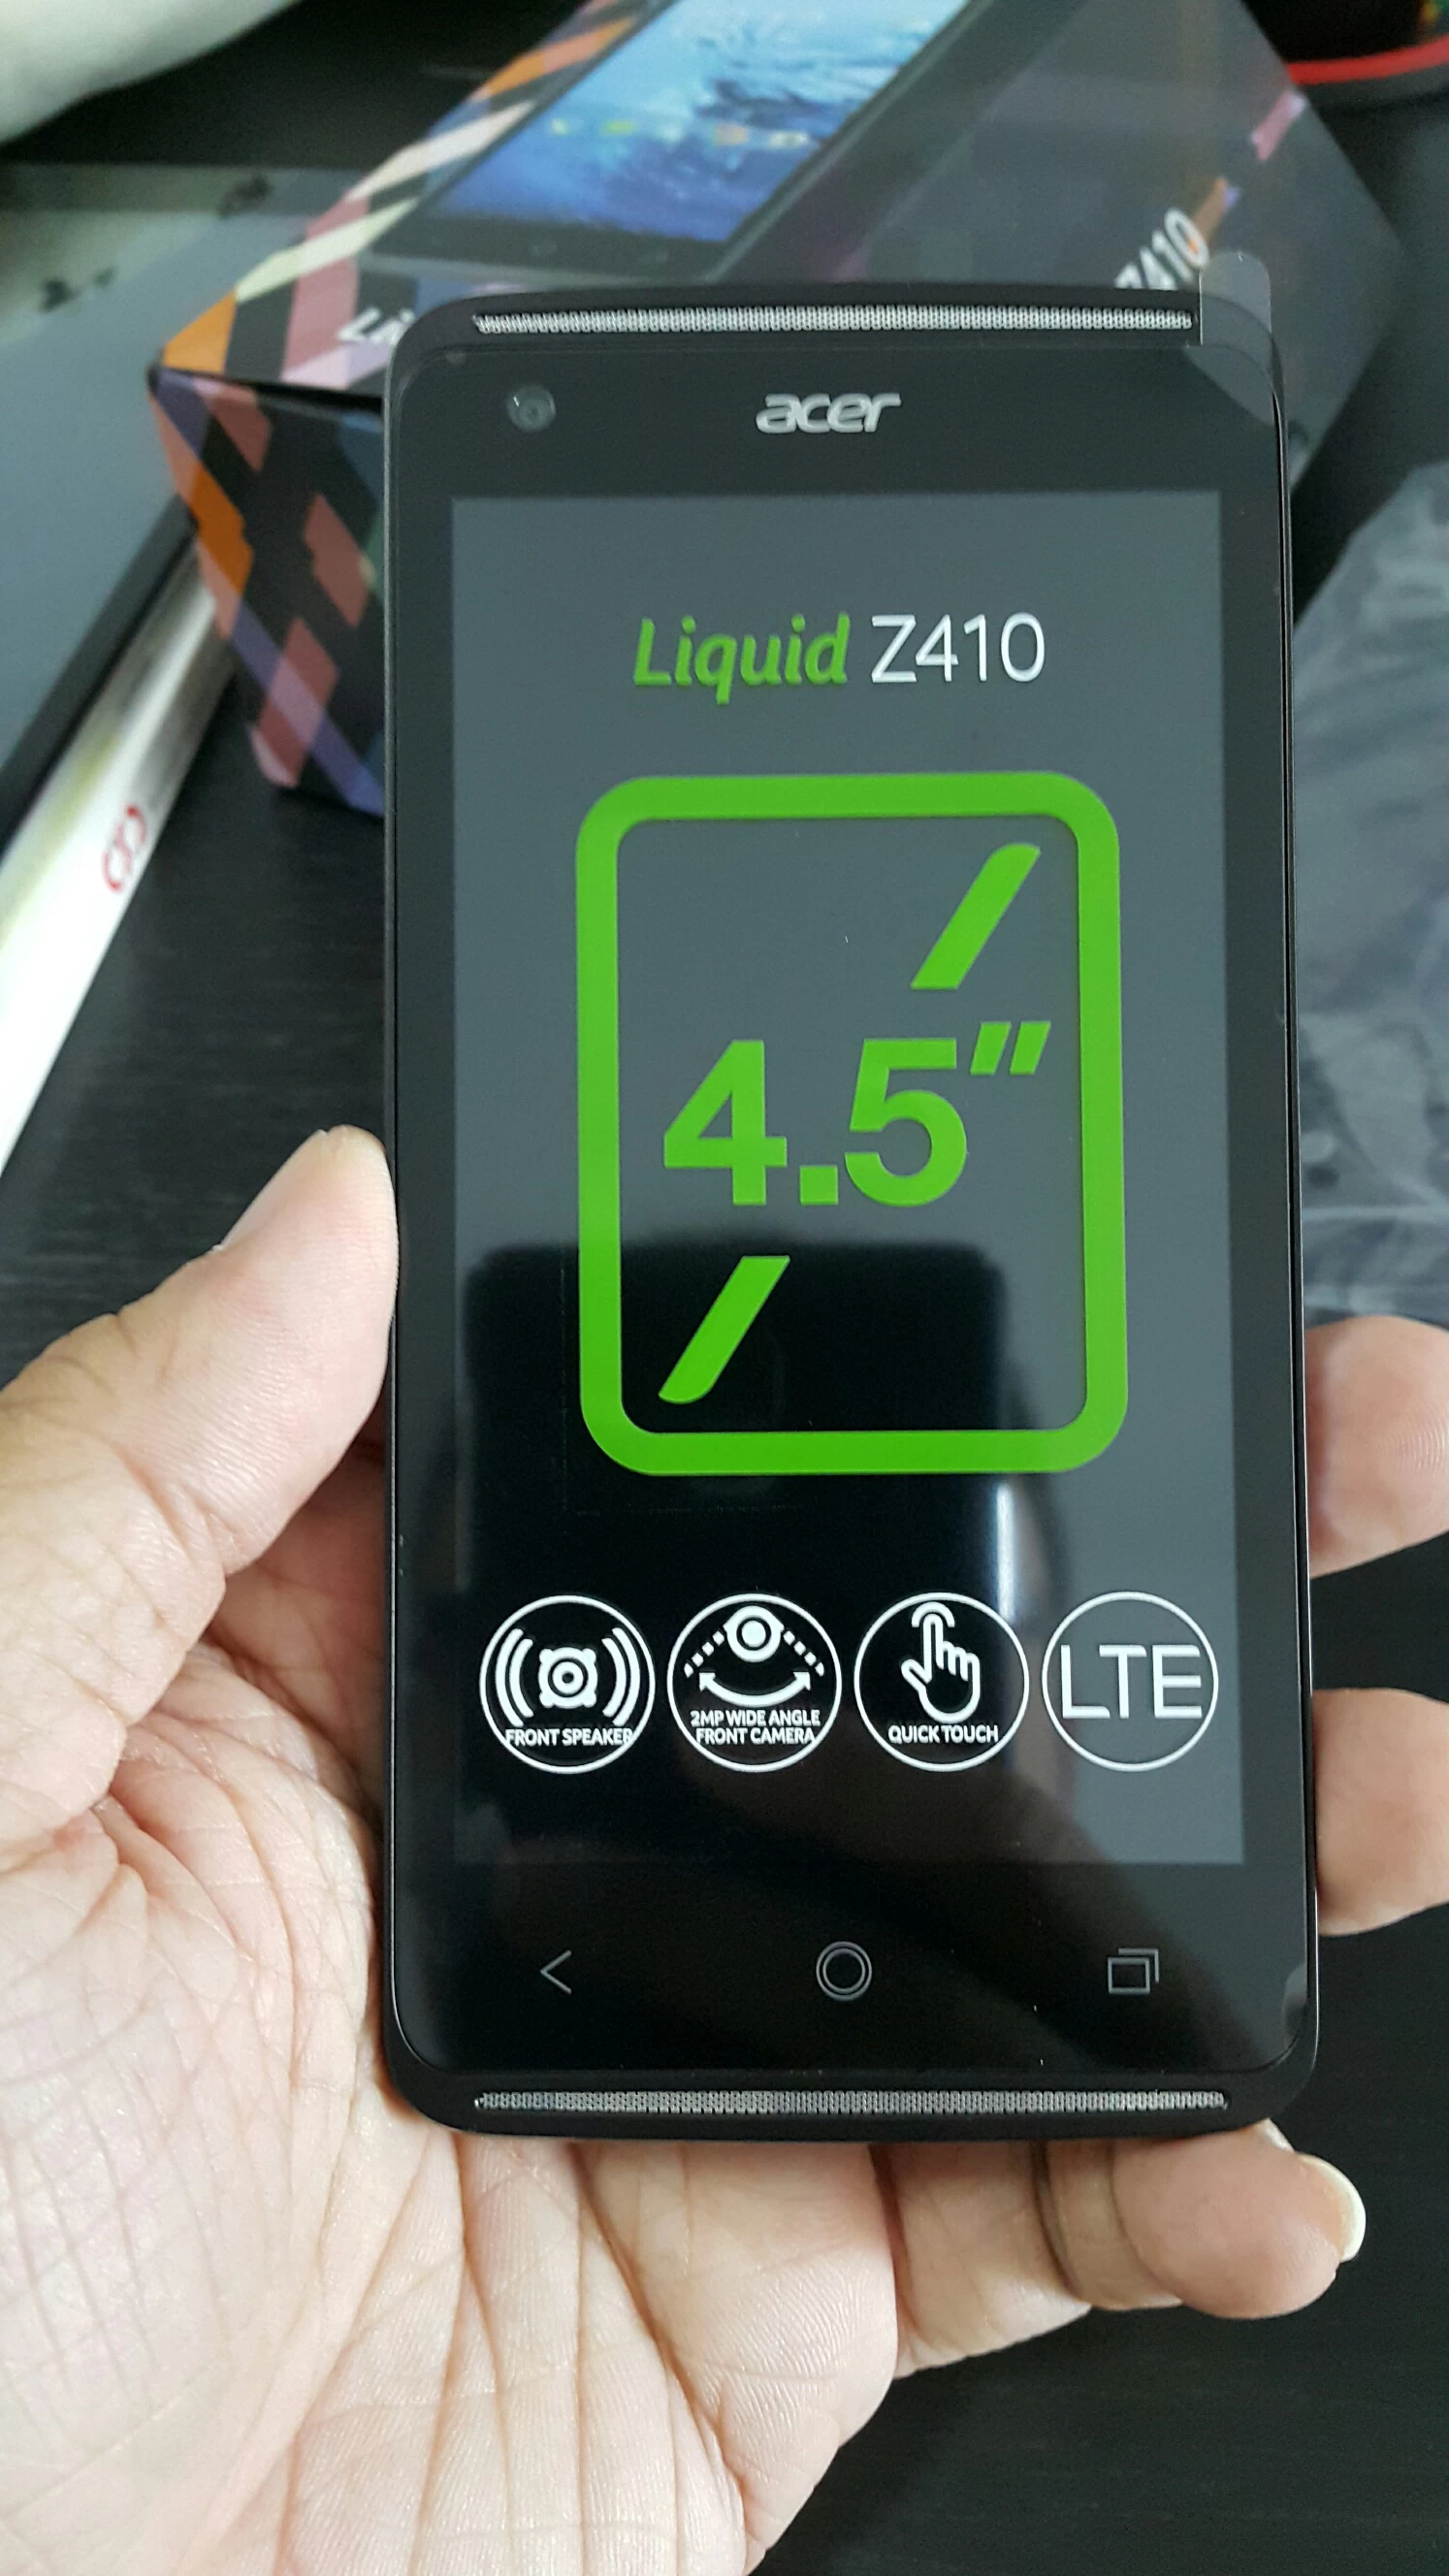 20150426 154018 resized 11 | smartphone | รีวิว Acer Liquid Z410 มือถือราคากลาง 4990 บาทมาพร้อม Design เรียบหรูที่รองรับ 4G LTE